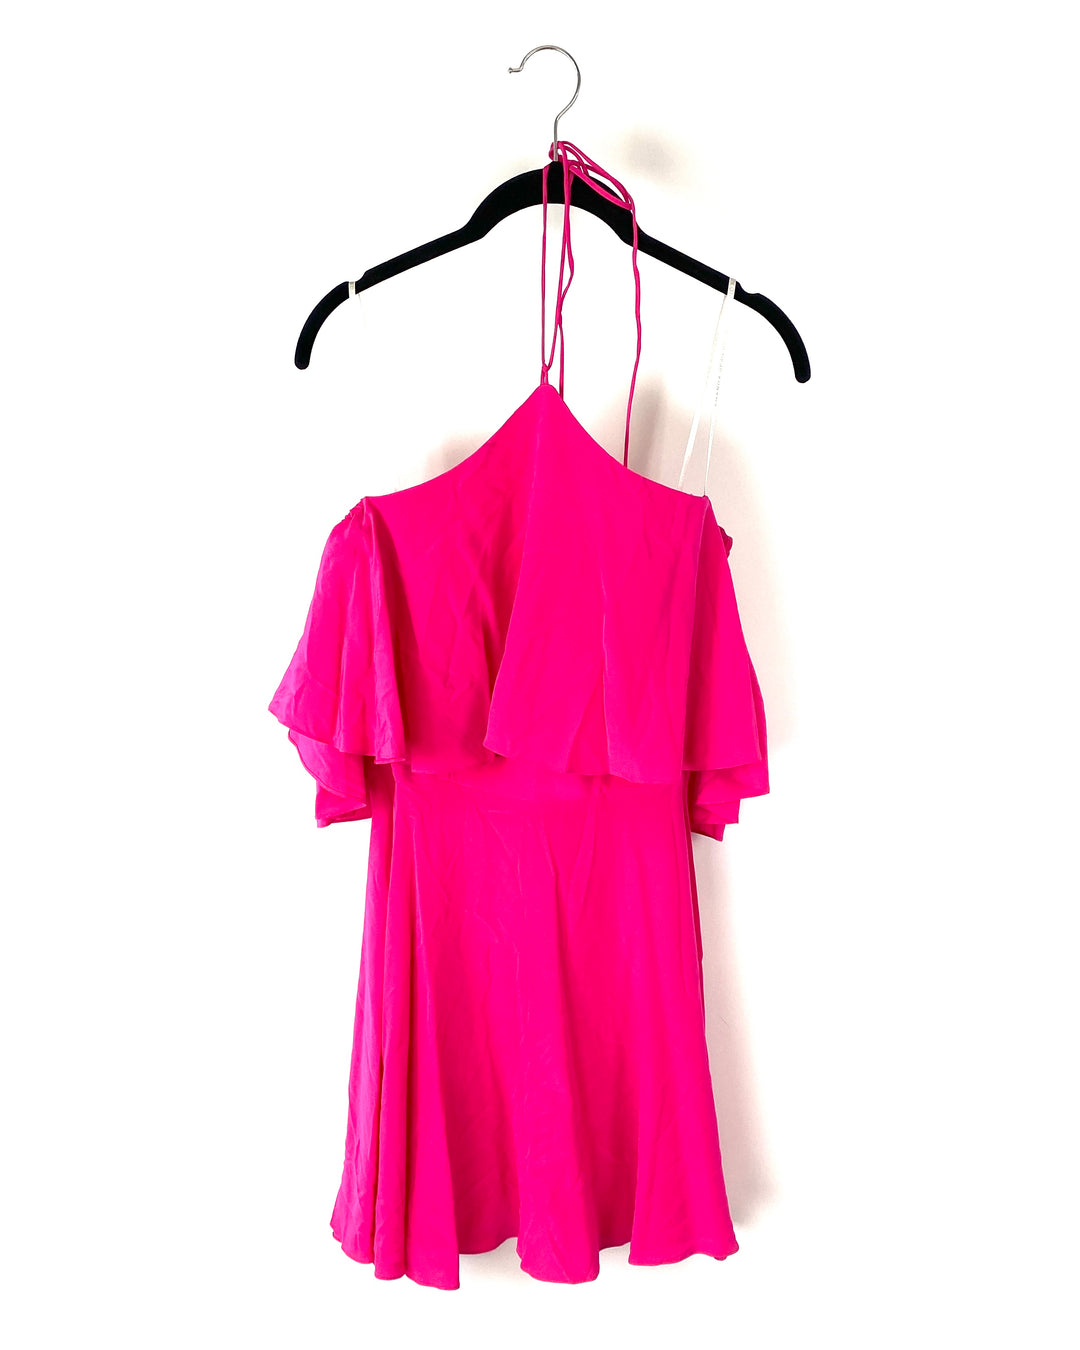 Hot Pink Dress - Size 4-6